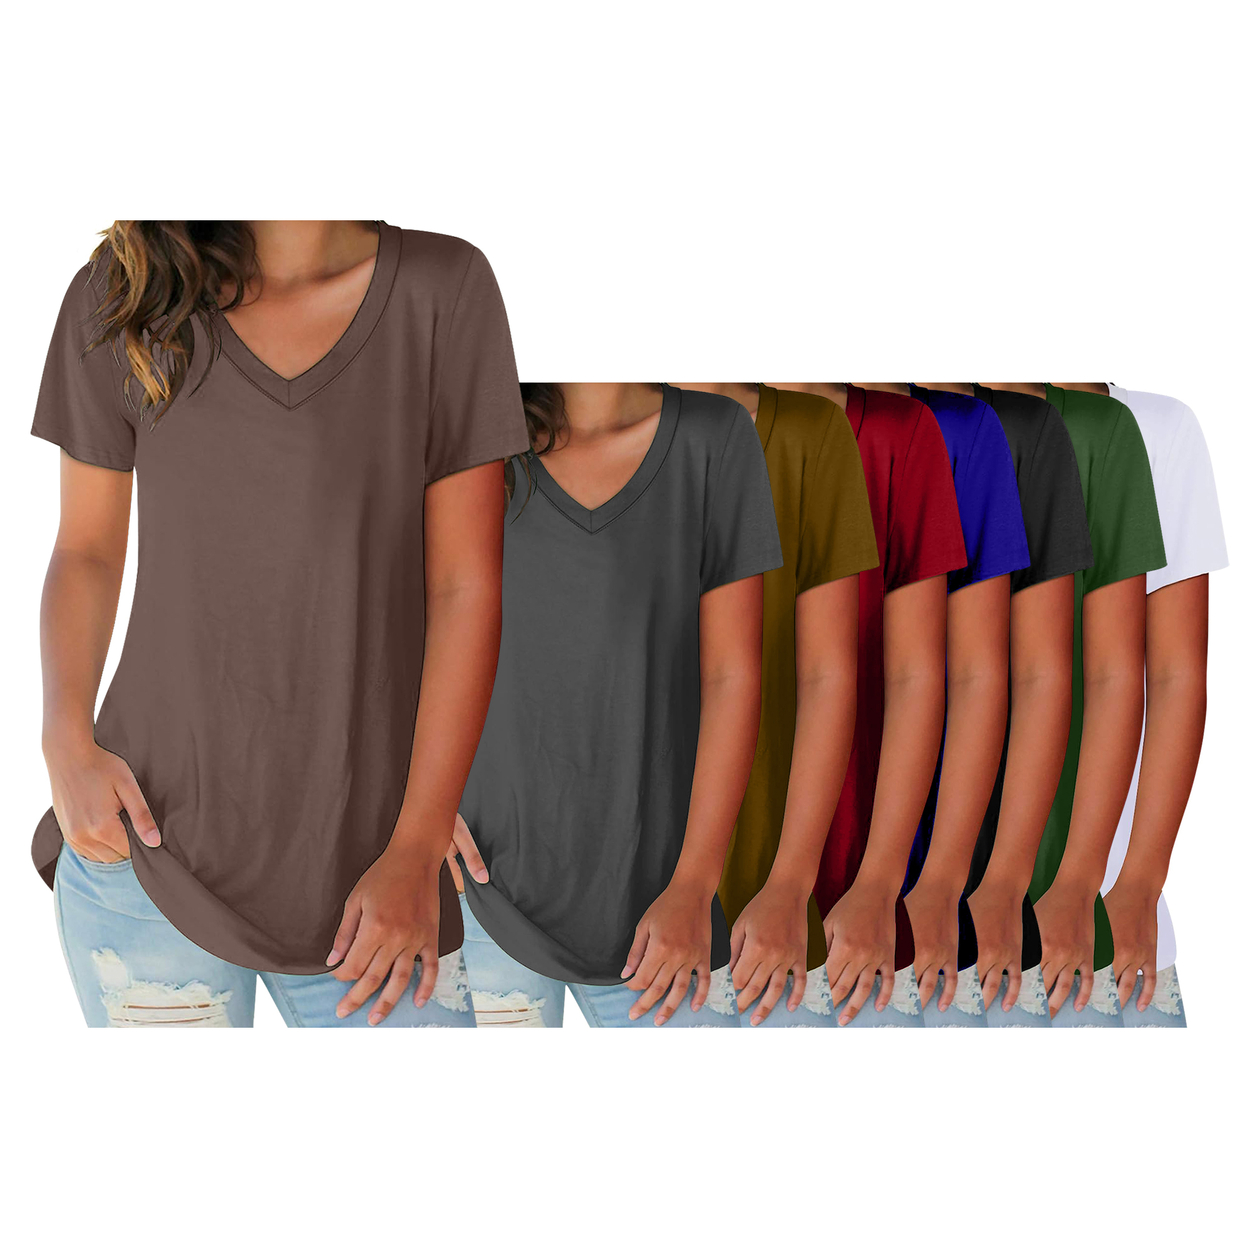 Women's Ultra-Soft Smooth Cotton Blend Basic V-Neck Short Sleeve Shirts - Green, Small